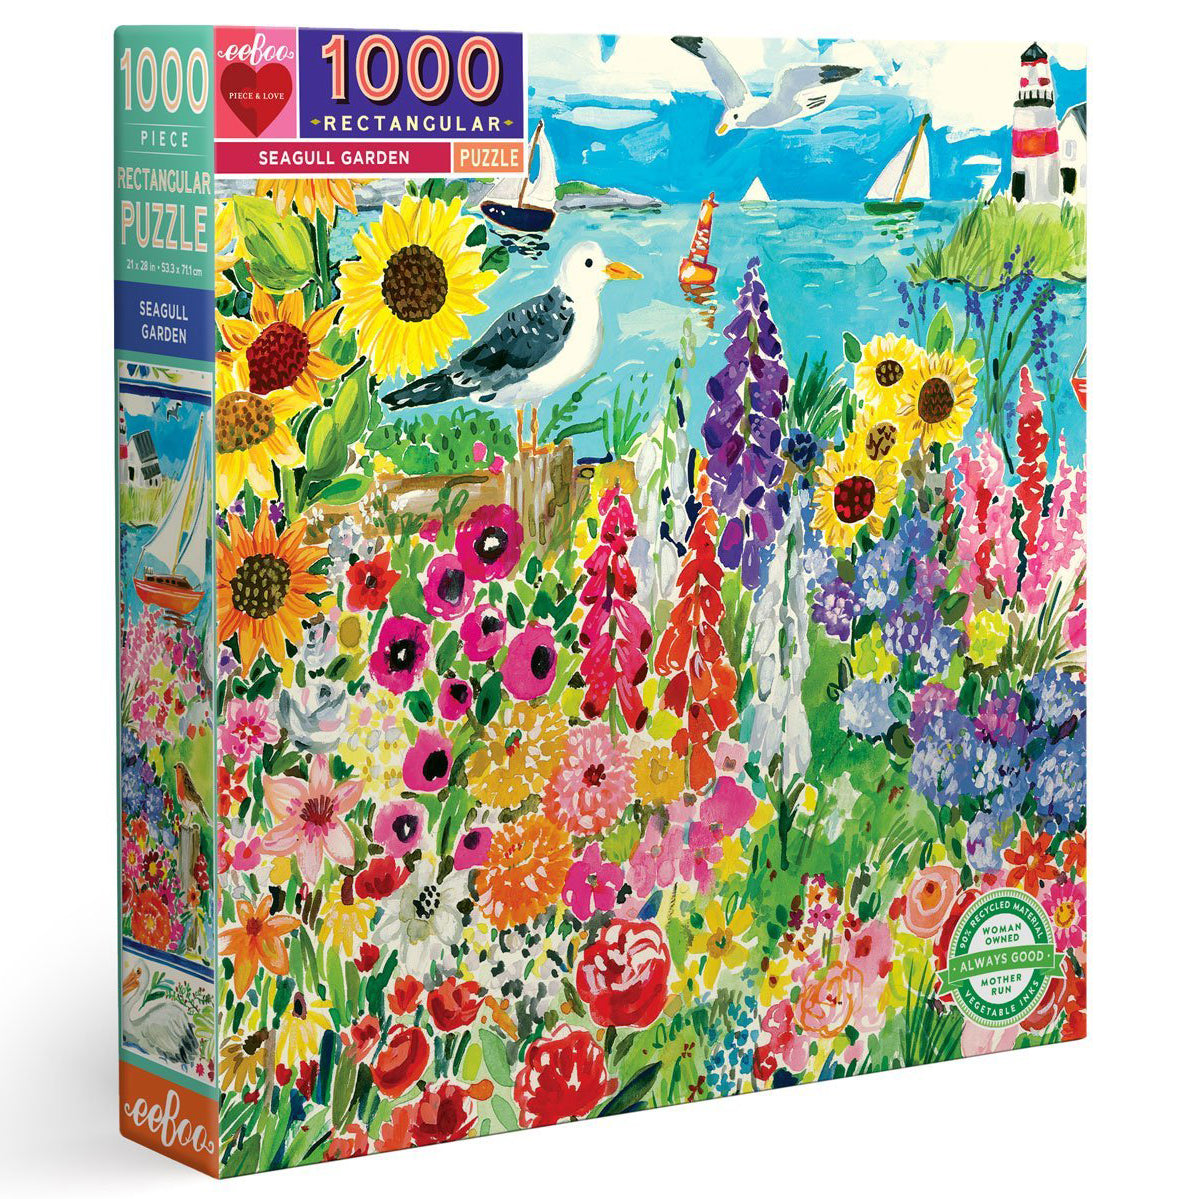 1000 piece puzzle - Seagull Garden